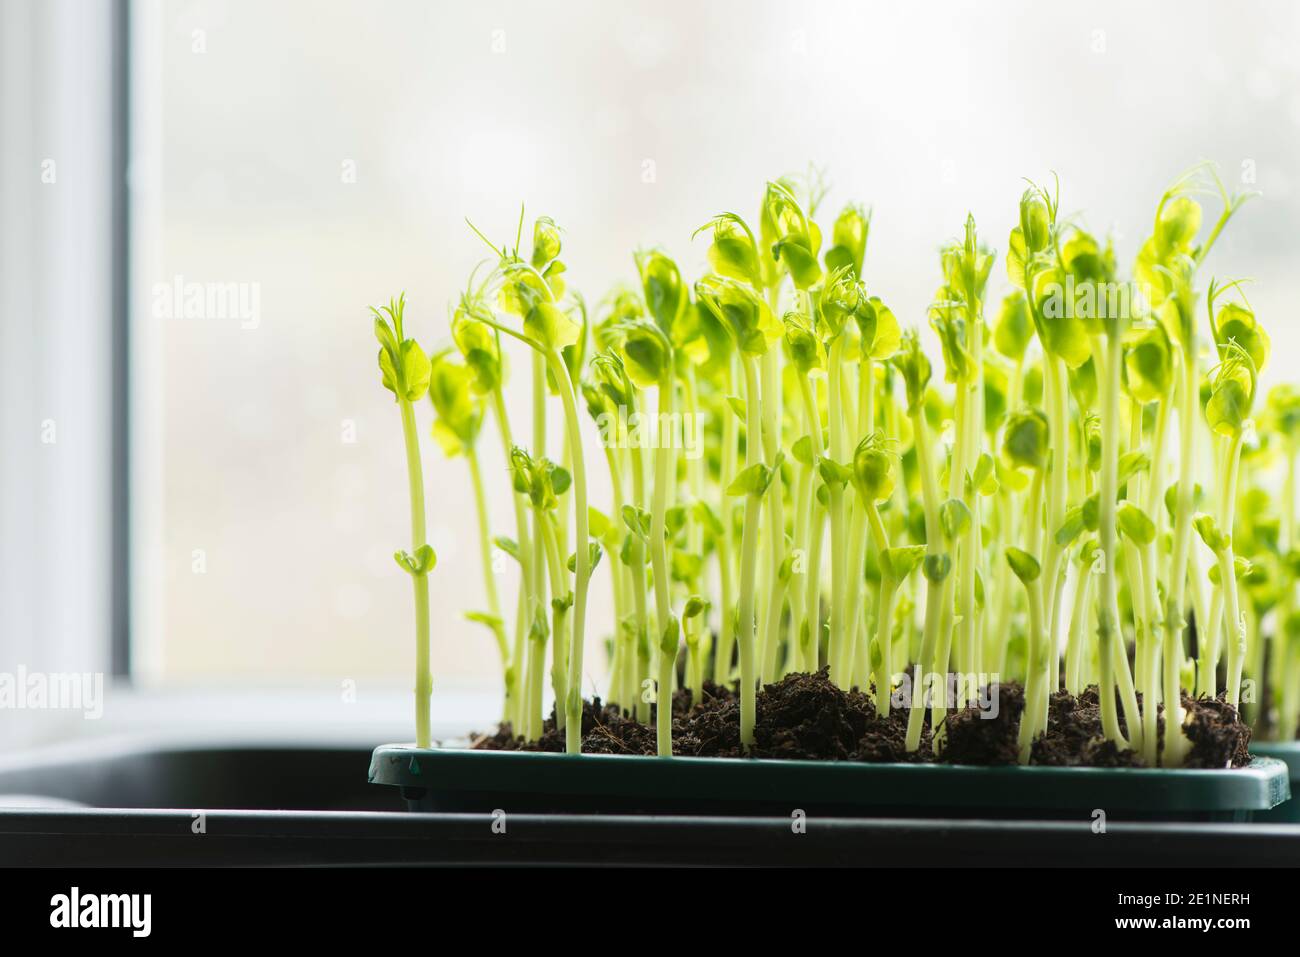 Pea shoots grown from dried supermarket marrowfat peas growing on a windowsill Stock Photo